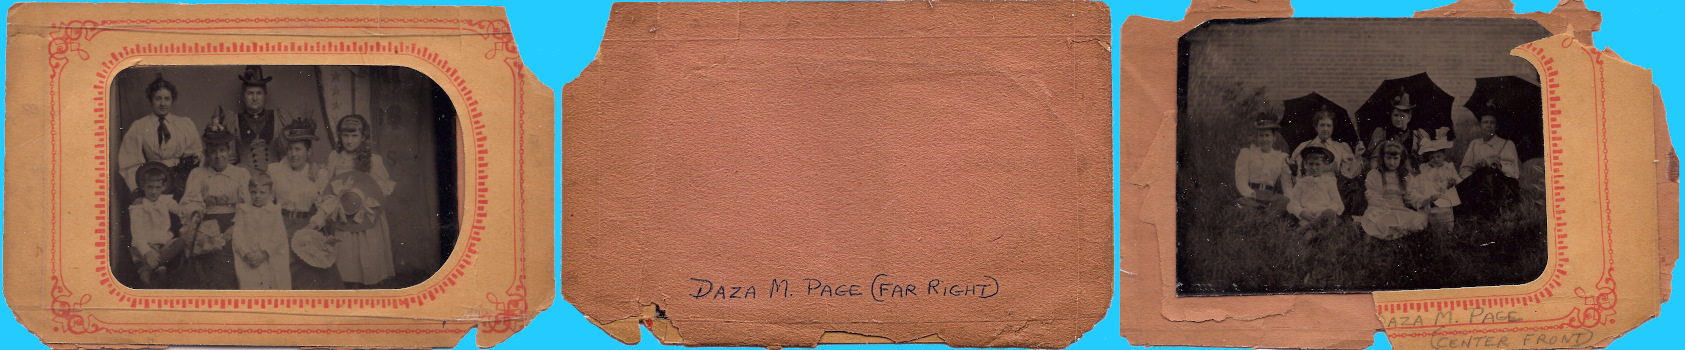 Daza M. Page